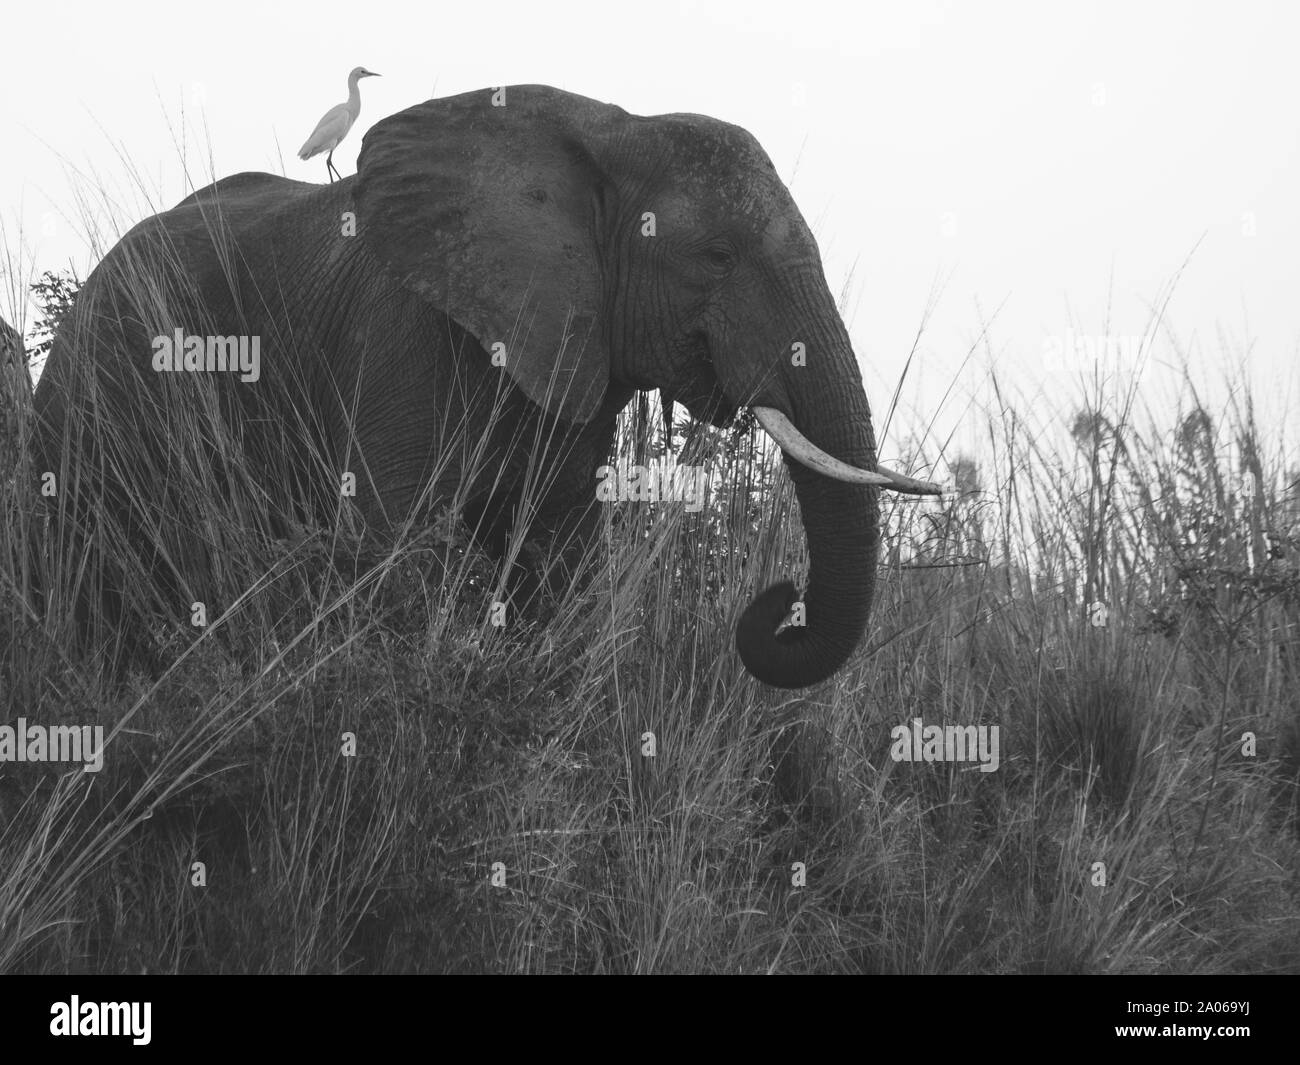 elephant in zambia Stock Photo